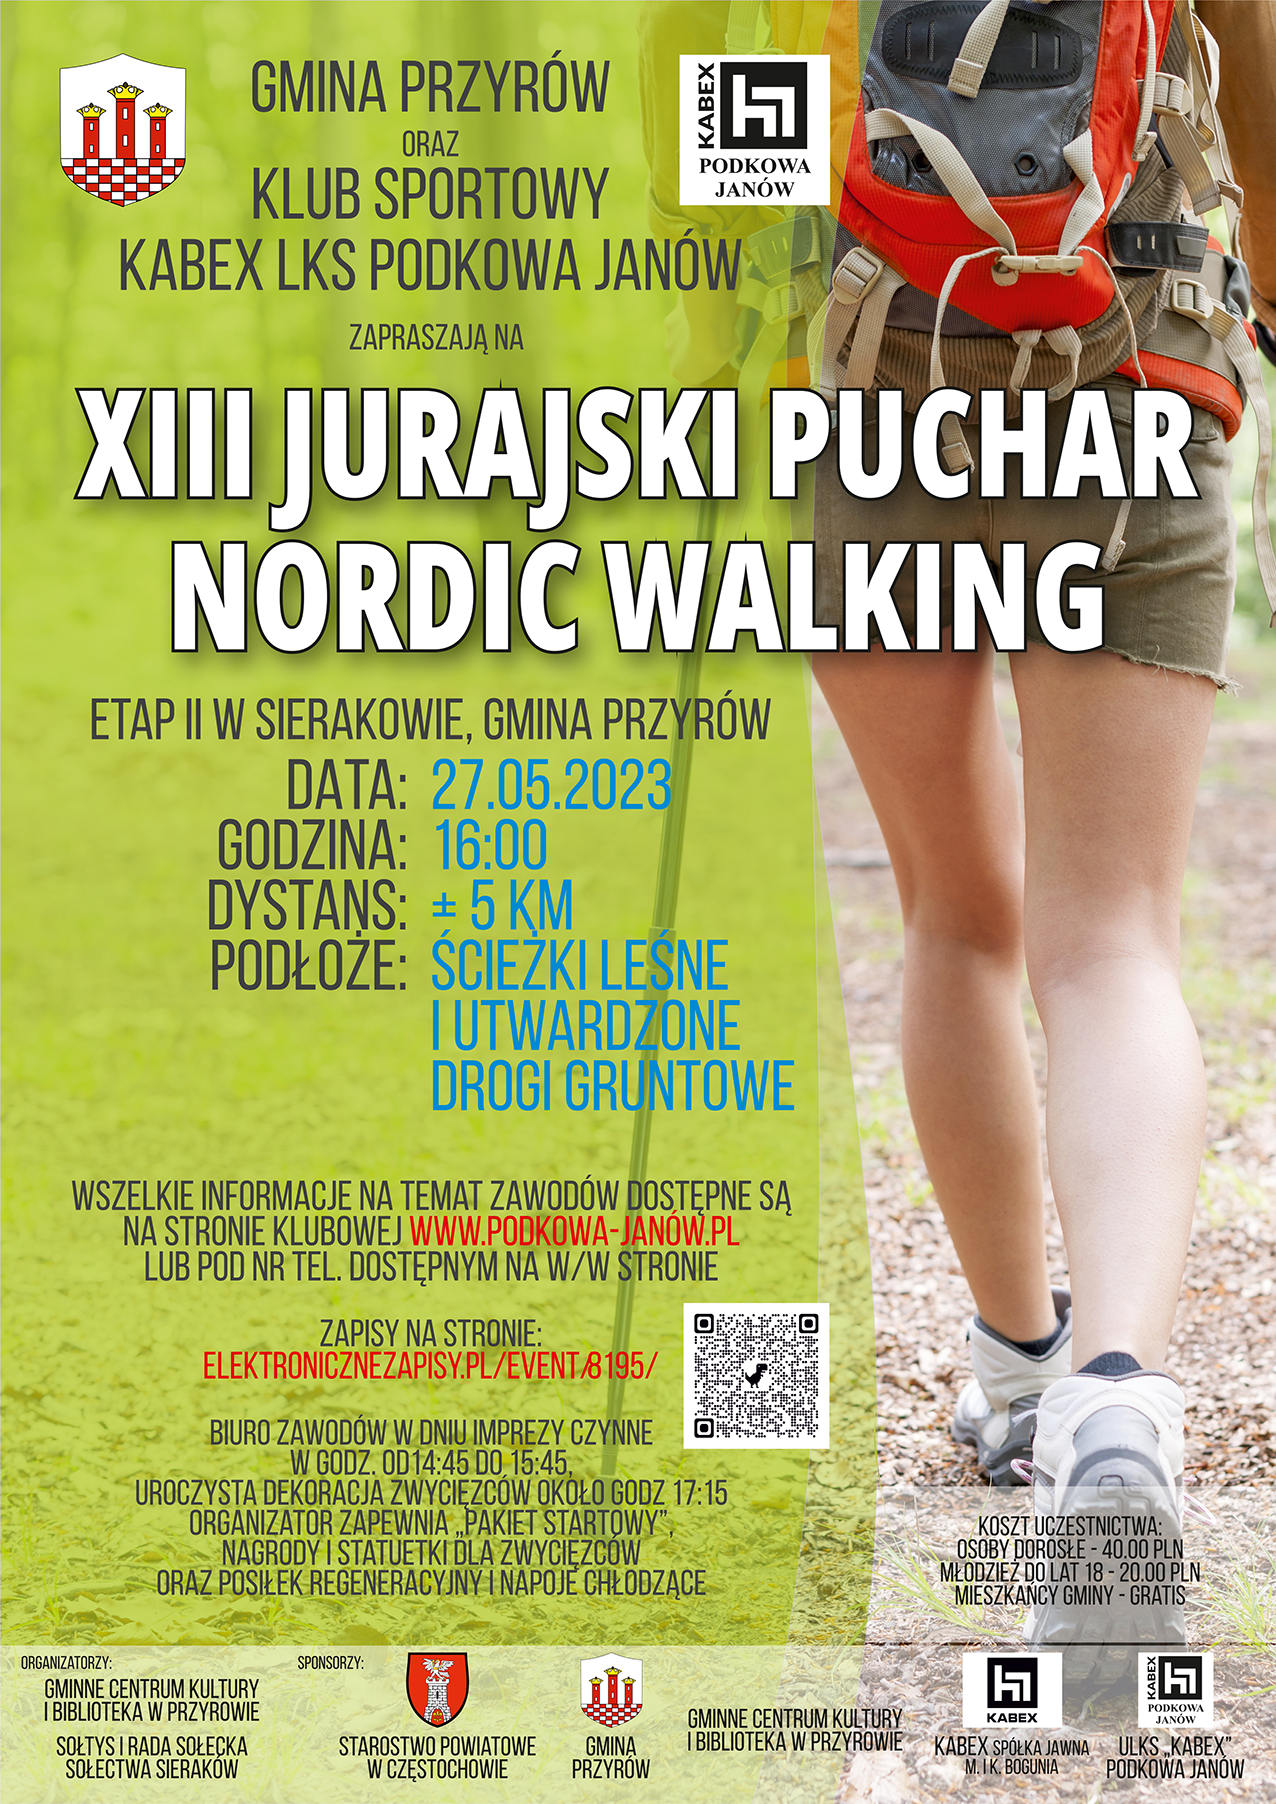 Plakat promujący XIII Jurajski Puchar Nordic Walking.